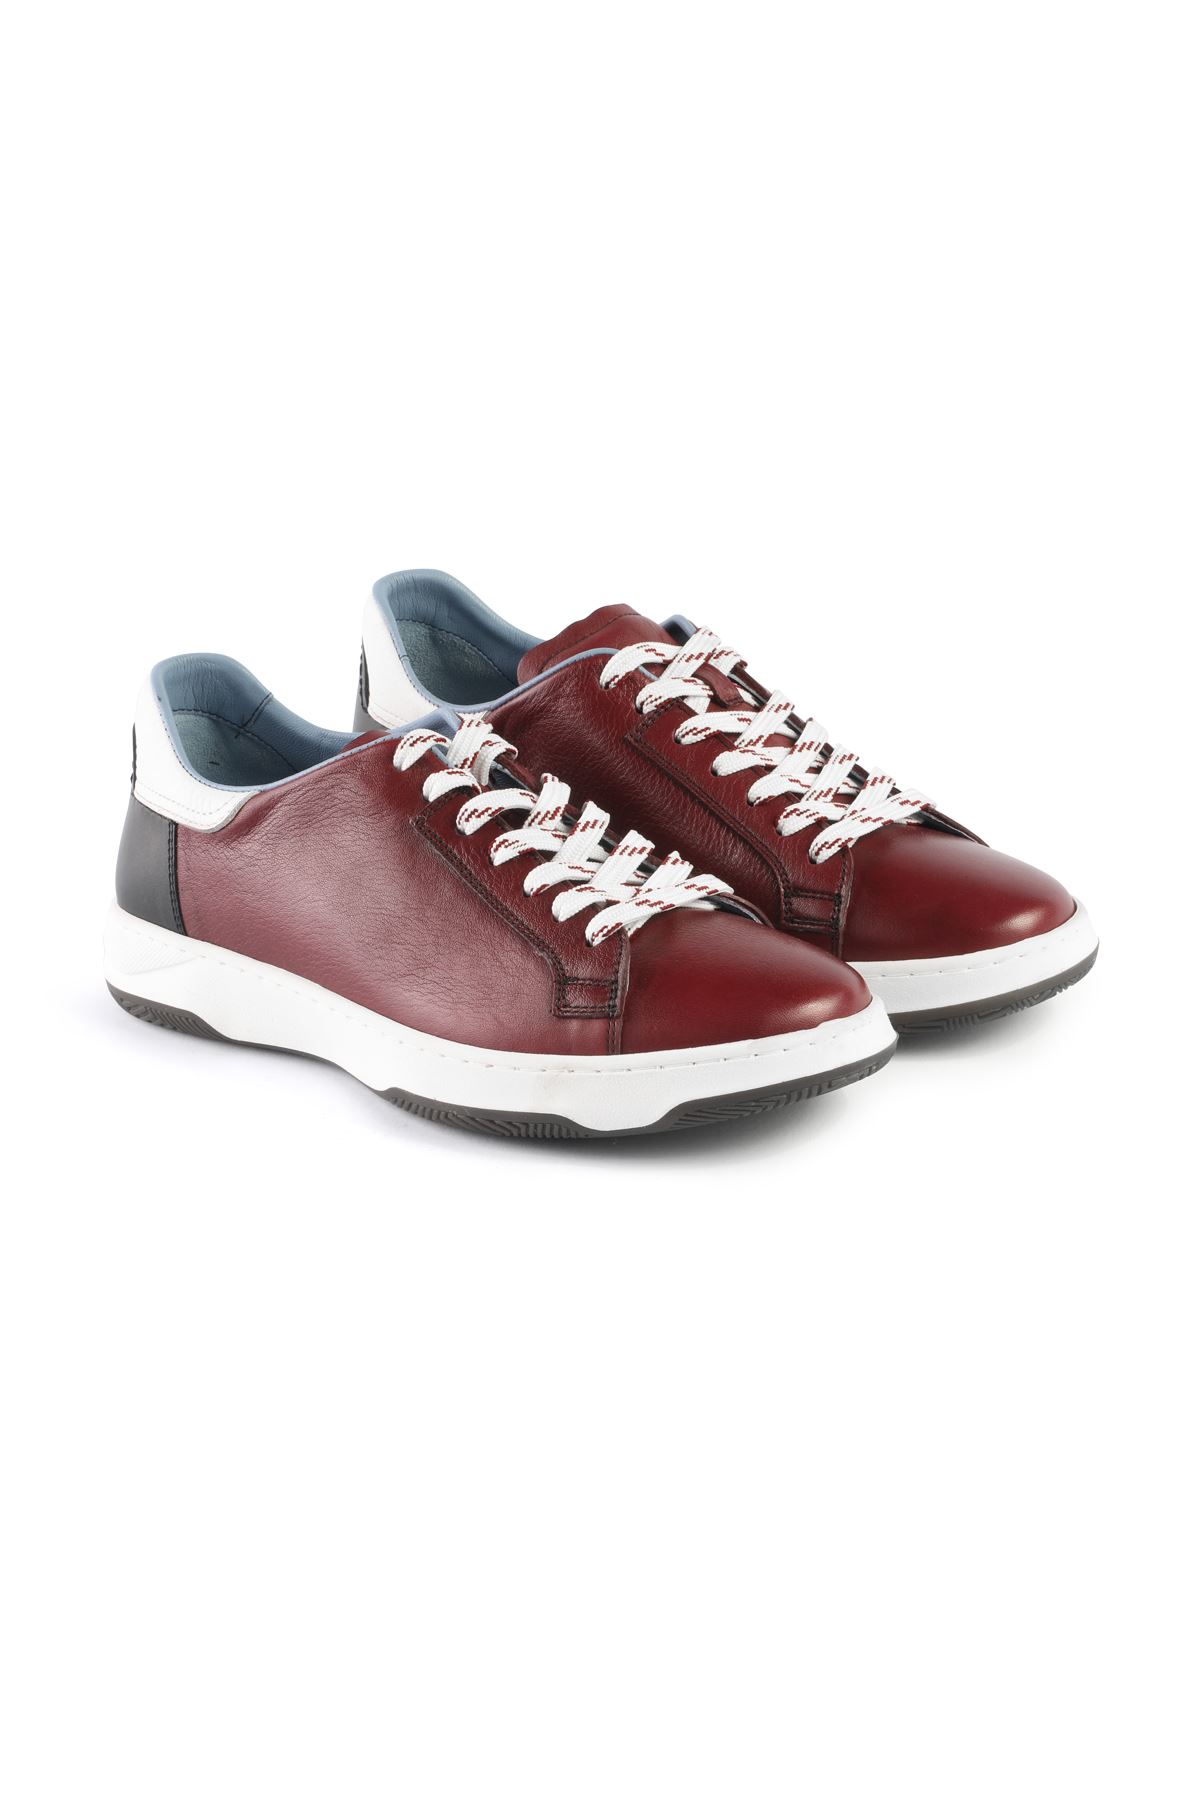 Libero L3227 Claret Red Sport Shoes